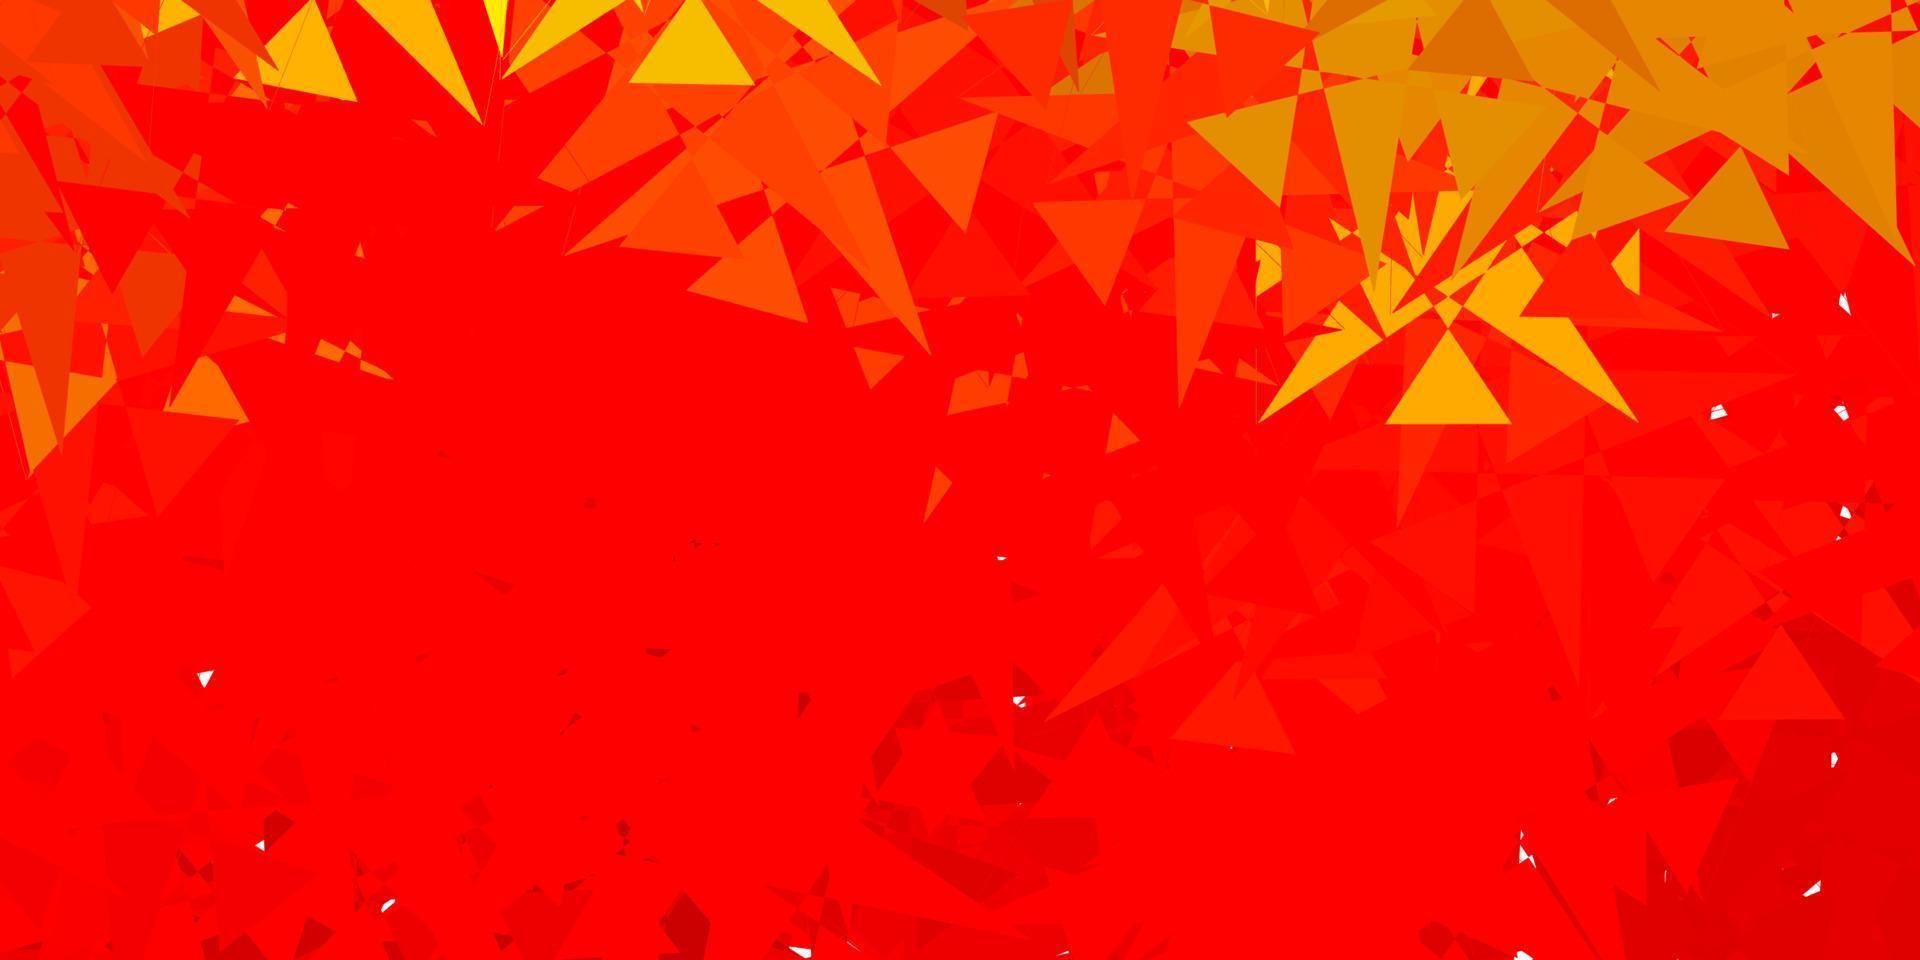 Light Orange vector background with random forms.